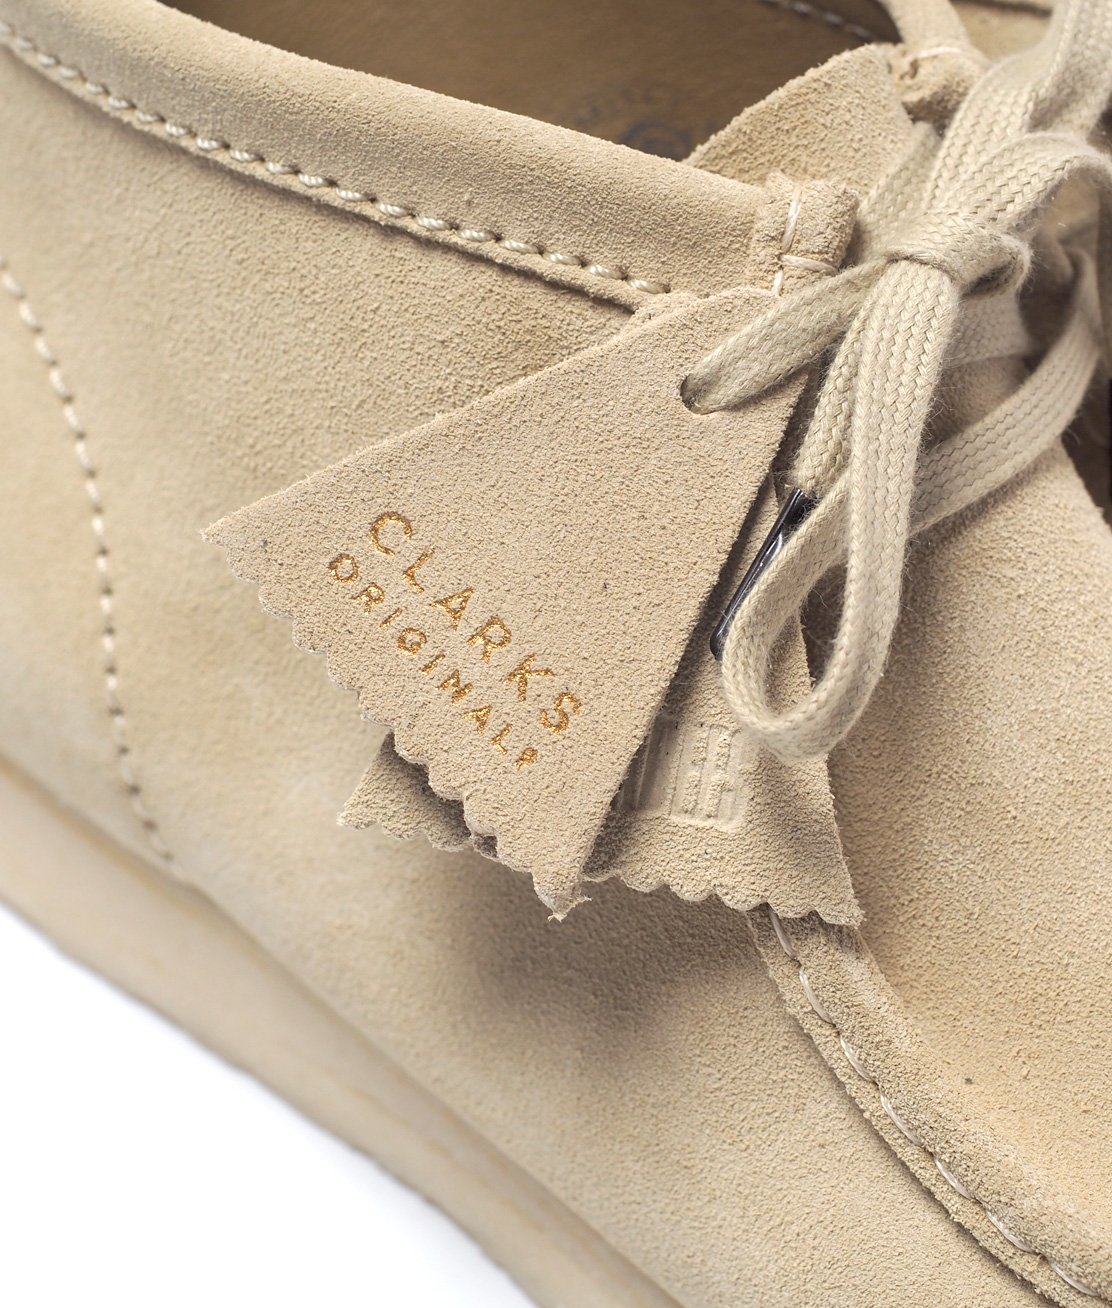 Clarks 革靴 エアワラビー ヴィンテージ 古着 雰囲気 - 靴